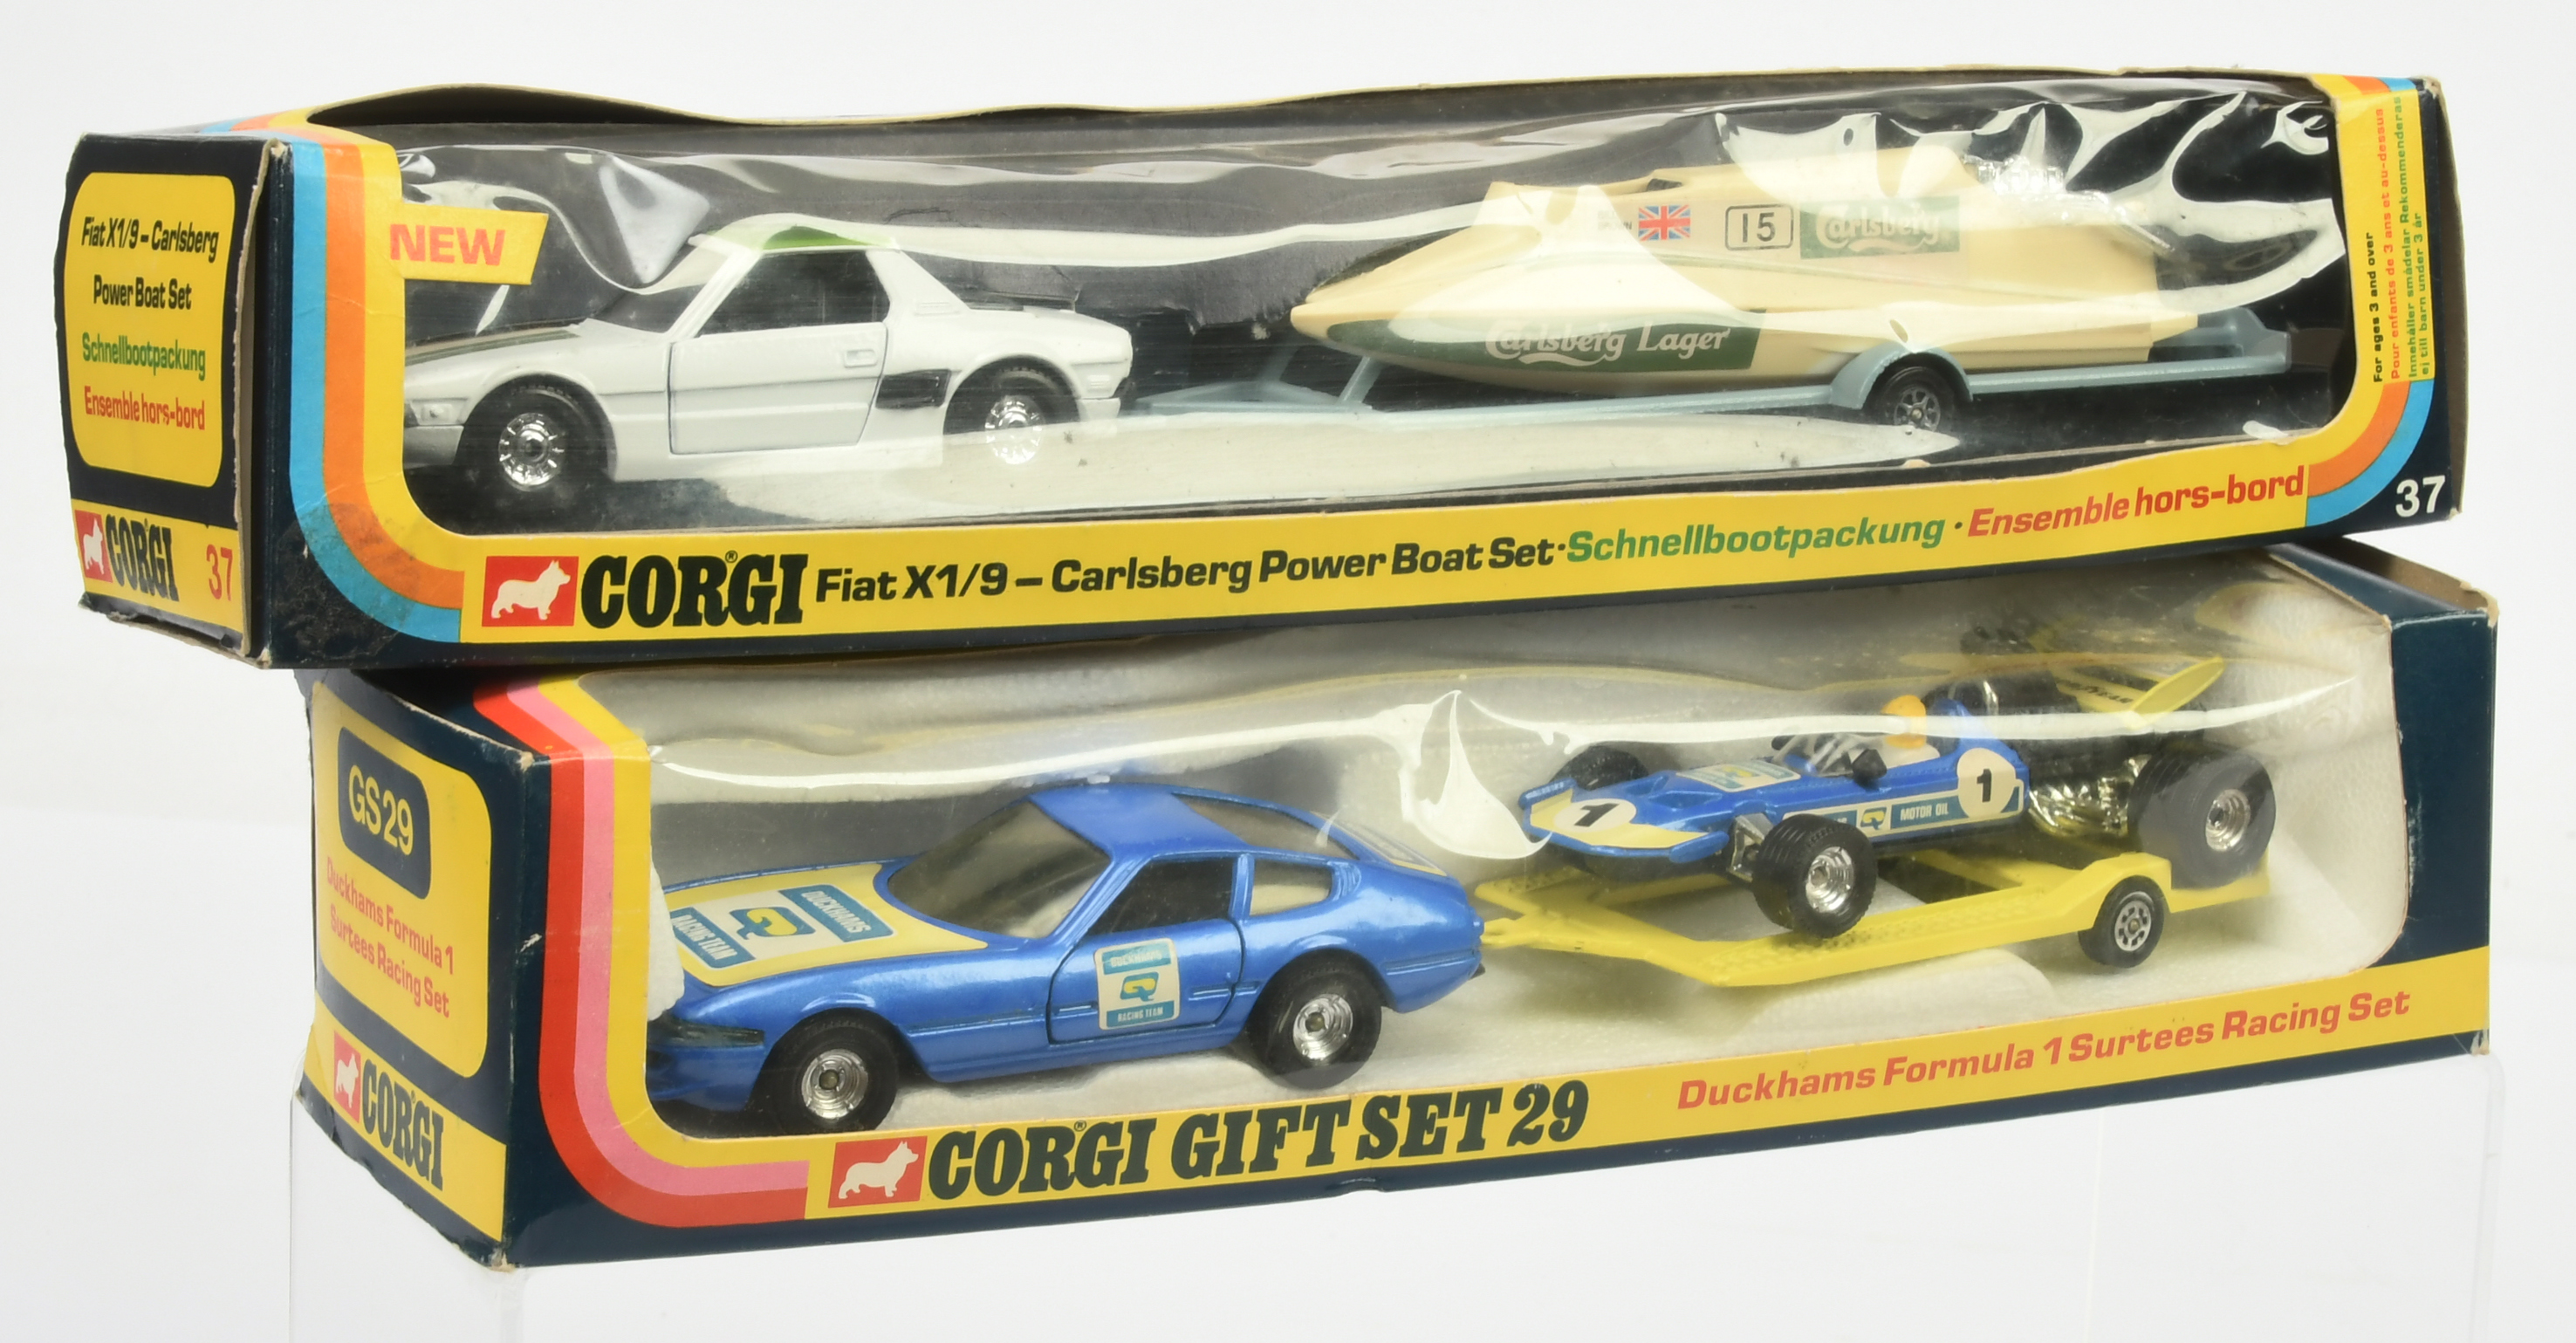 Corgi Toys Gift Sets A Pair - (1) GS29 "Duckhams" Racing To Include - Ferrari Daytona  and Surtee...